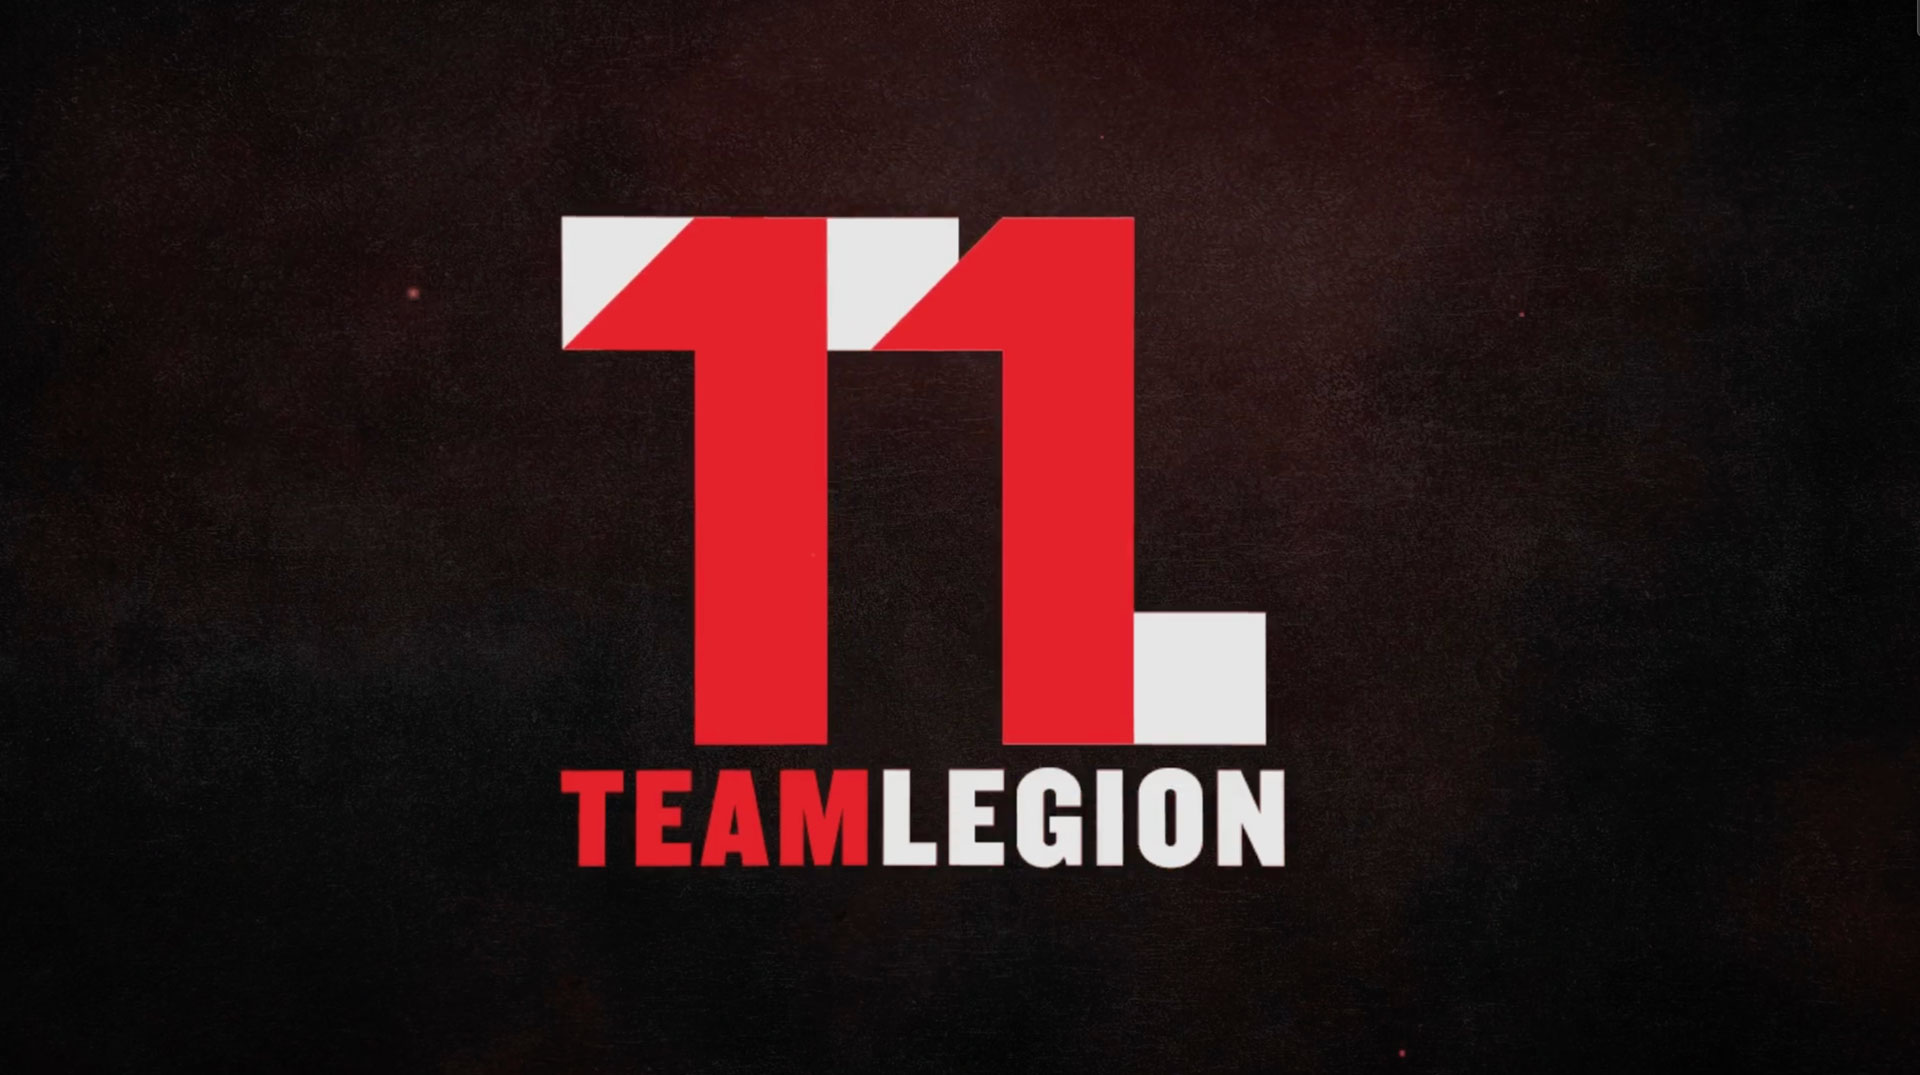 Meet Team Legion